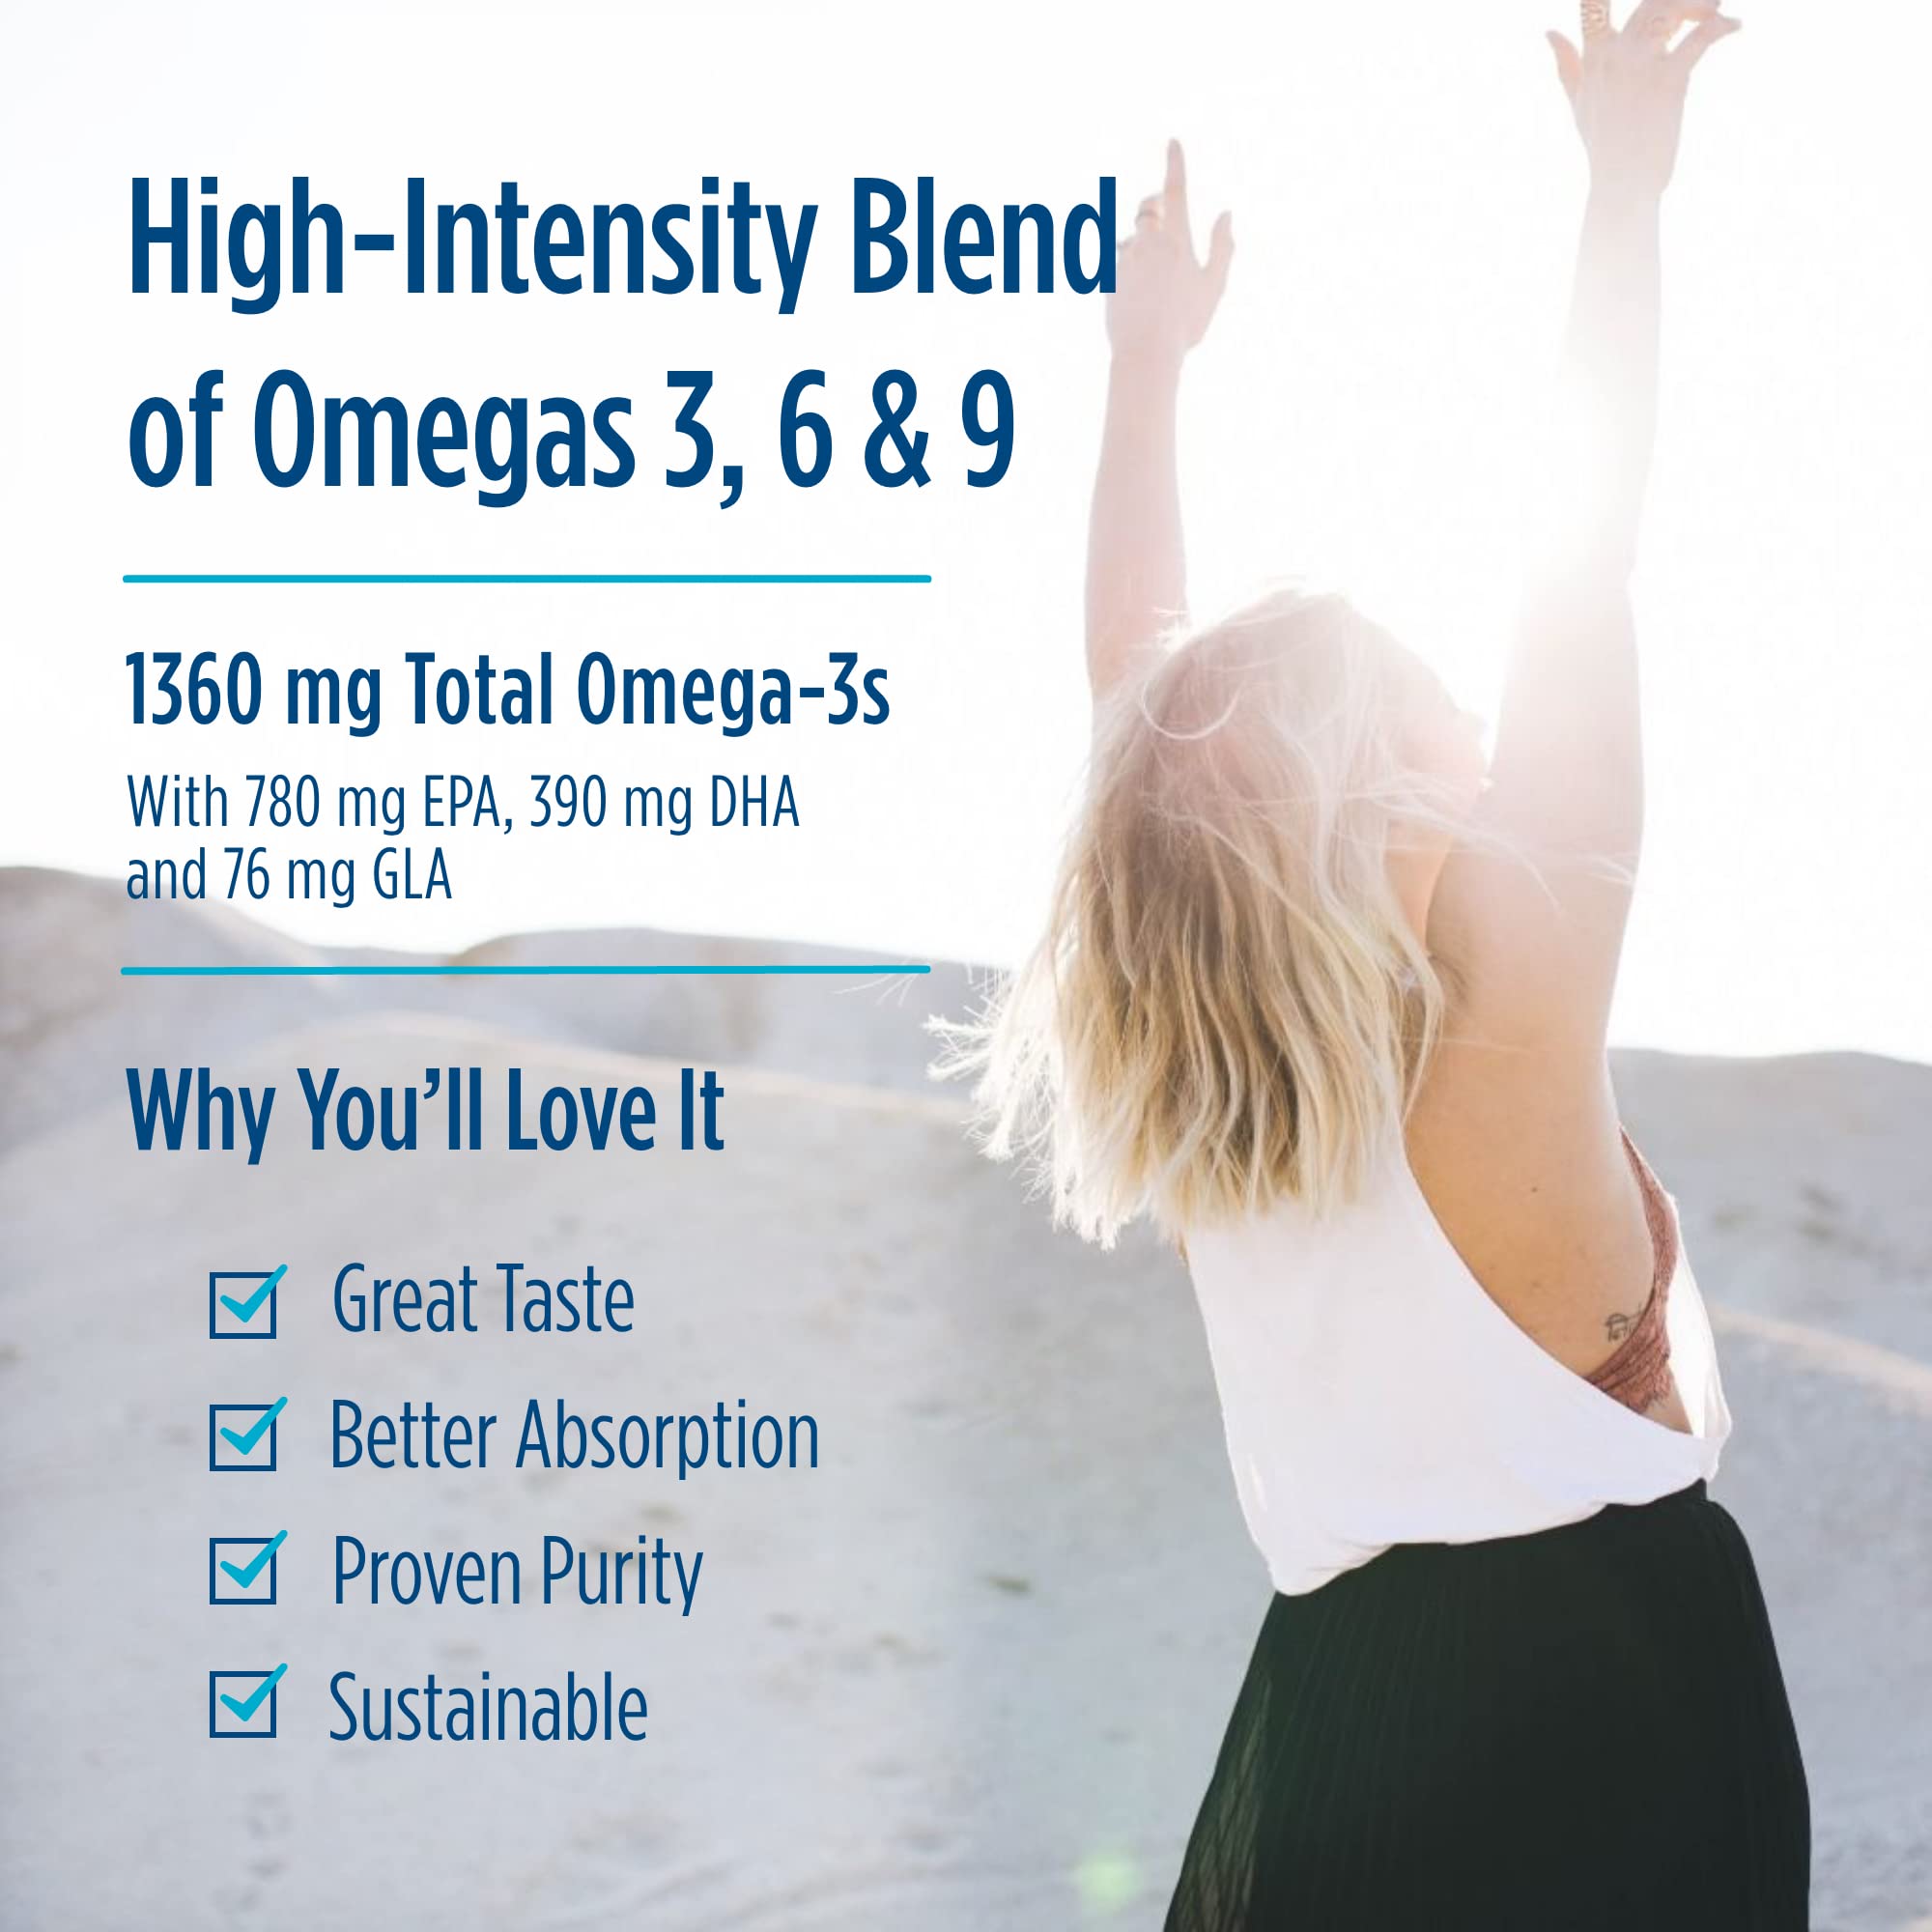 Nordic Naturals Complete Omega Xtra - High Potency Omega 3-6-9 Complex, Lemon Flavor, 60 Count